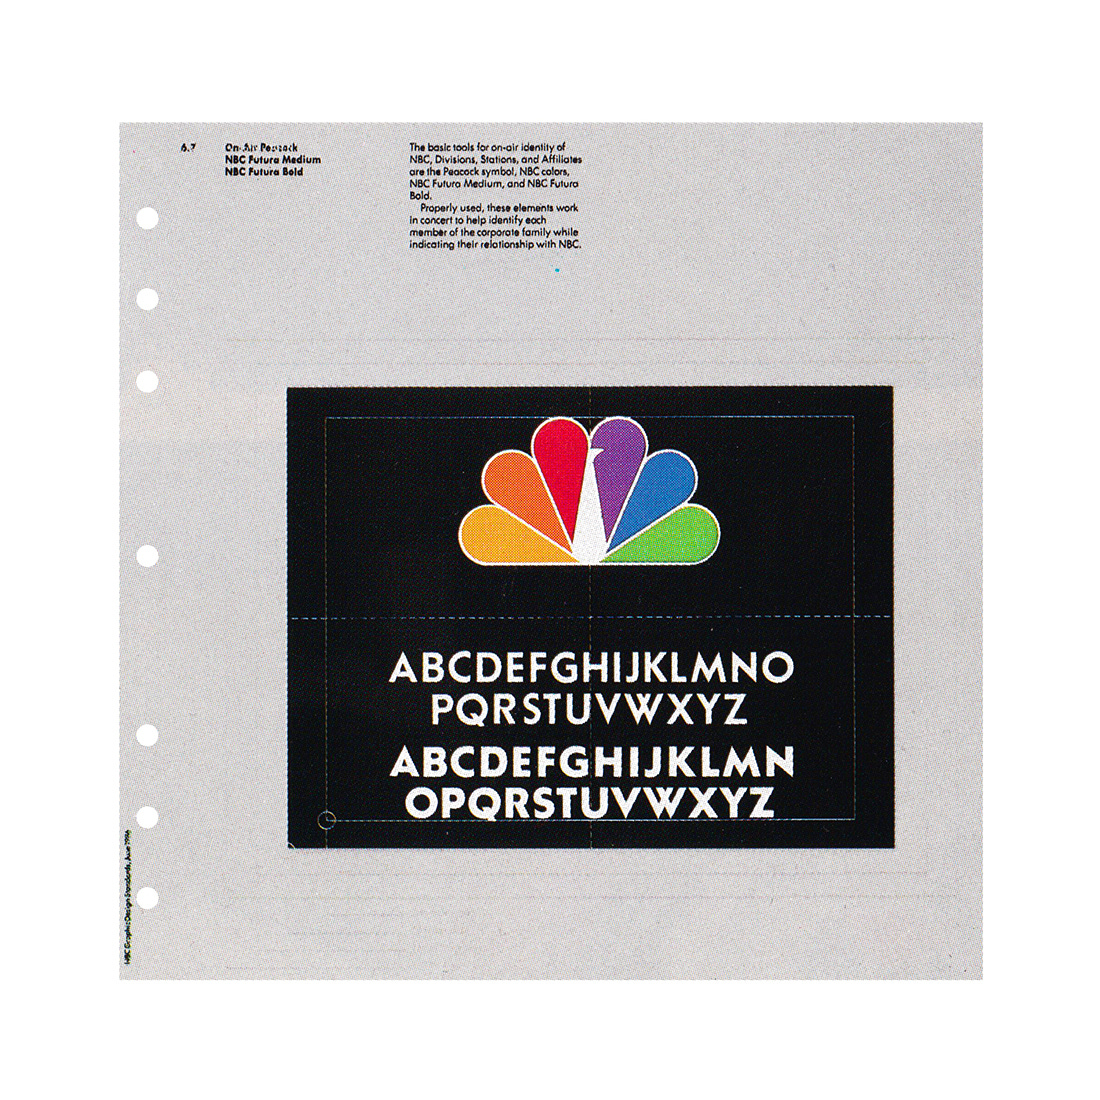 Chermayeff & Geismar's 1986 logo for NBC.